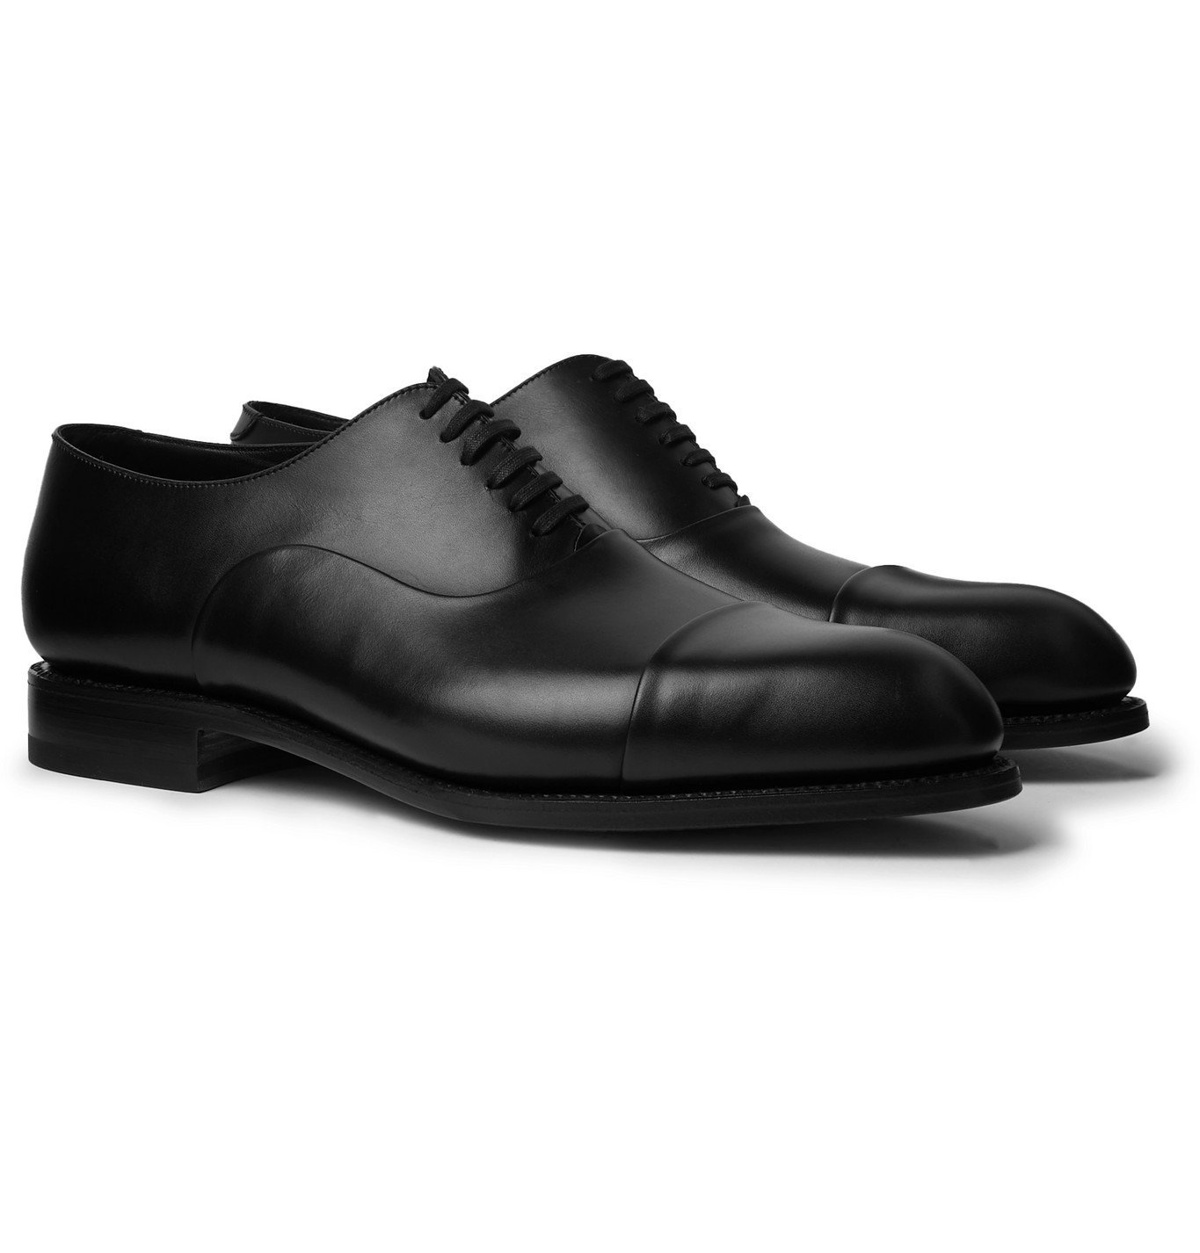 J.M. Weston - Leather Derby Shoes - Black J.M. Weston